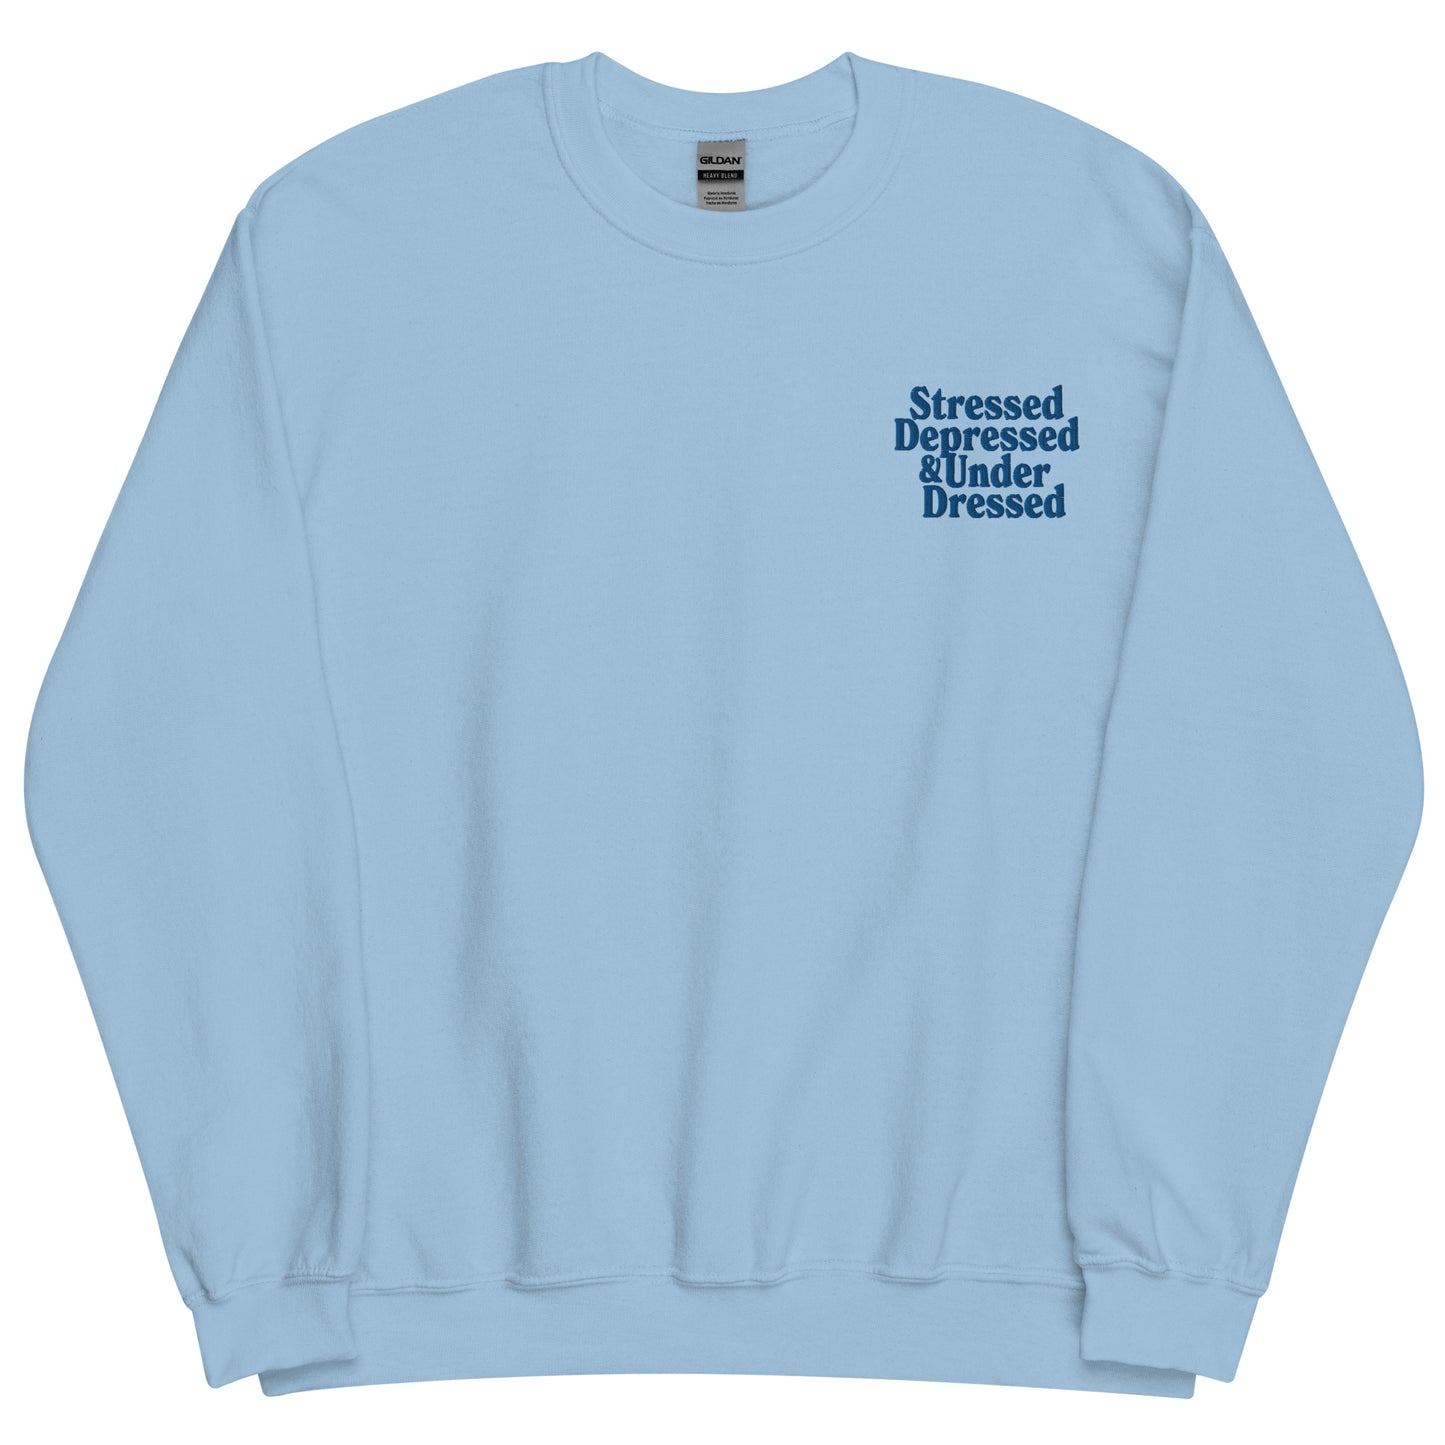 Stressed, Depressed & Underdressed - Embroidered Unisex Sweatshirt